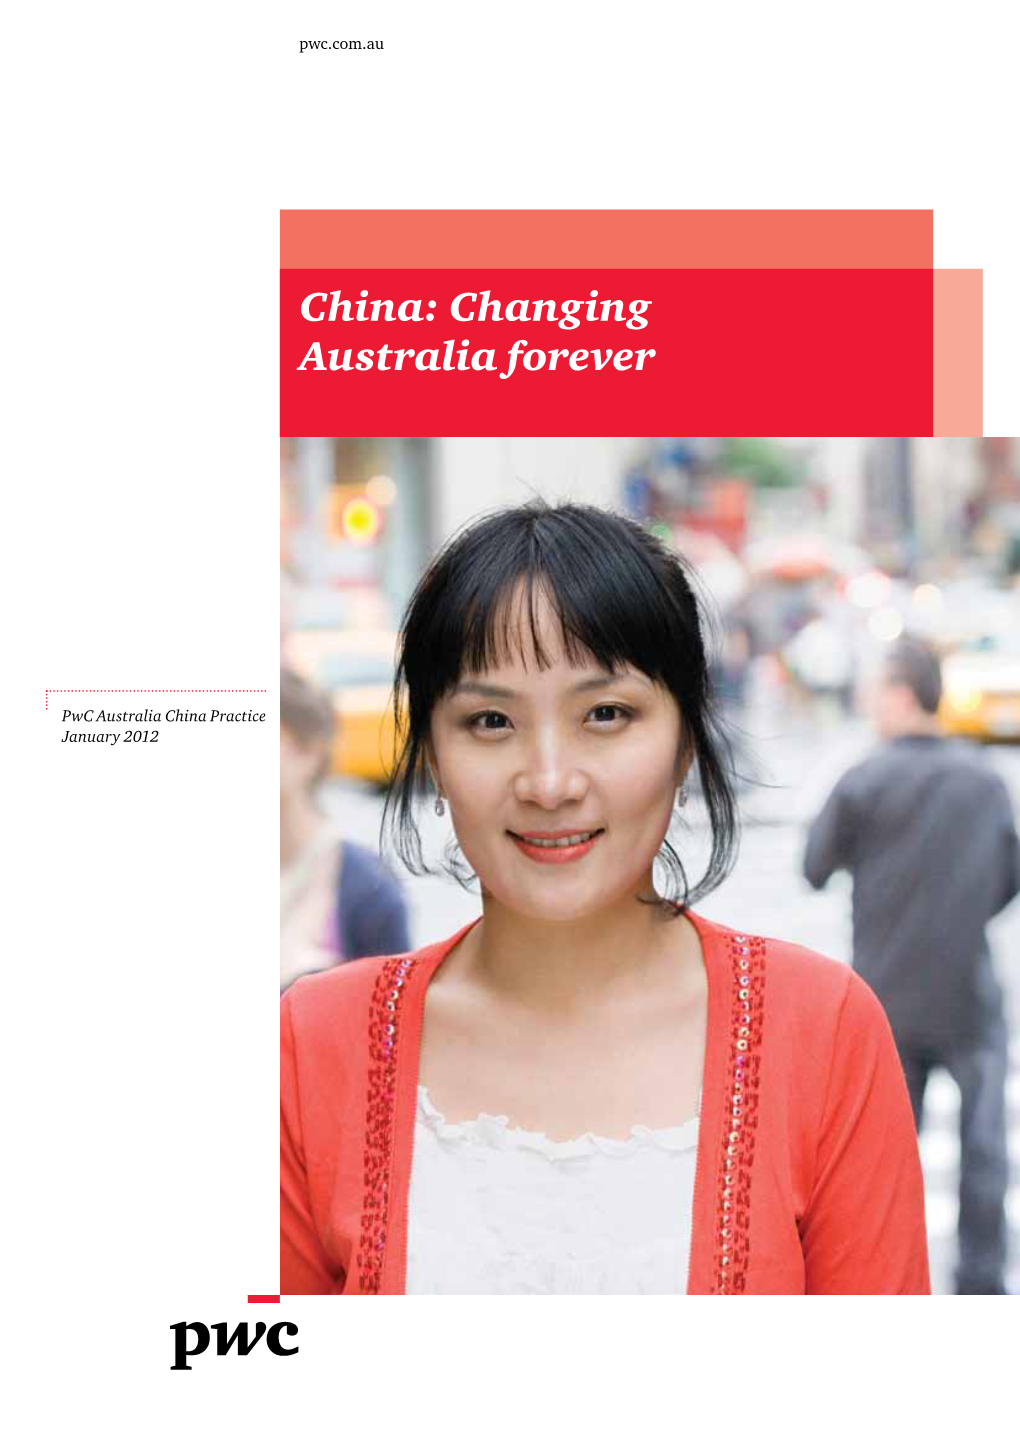 China: Changing Australia Forever